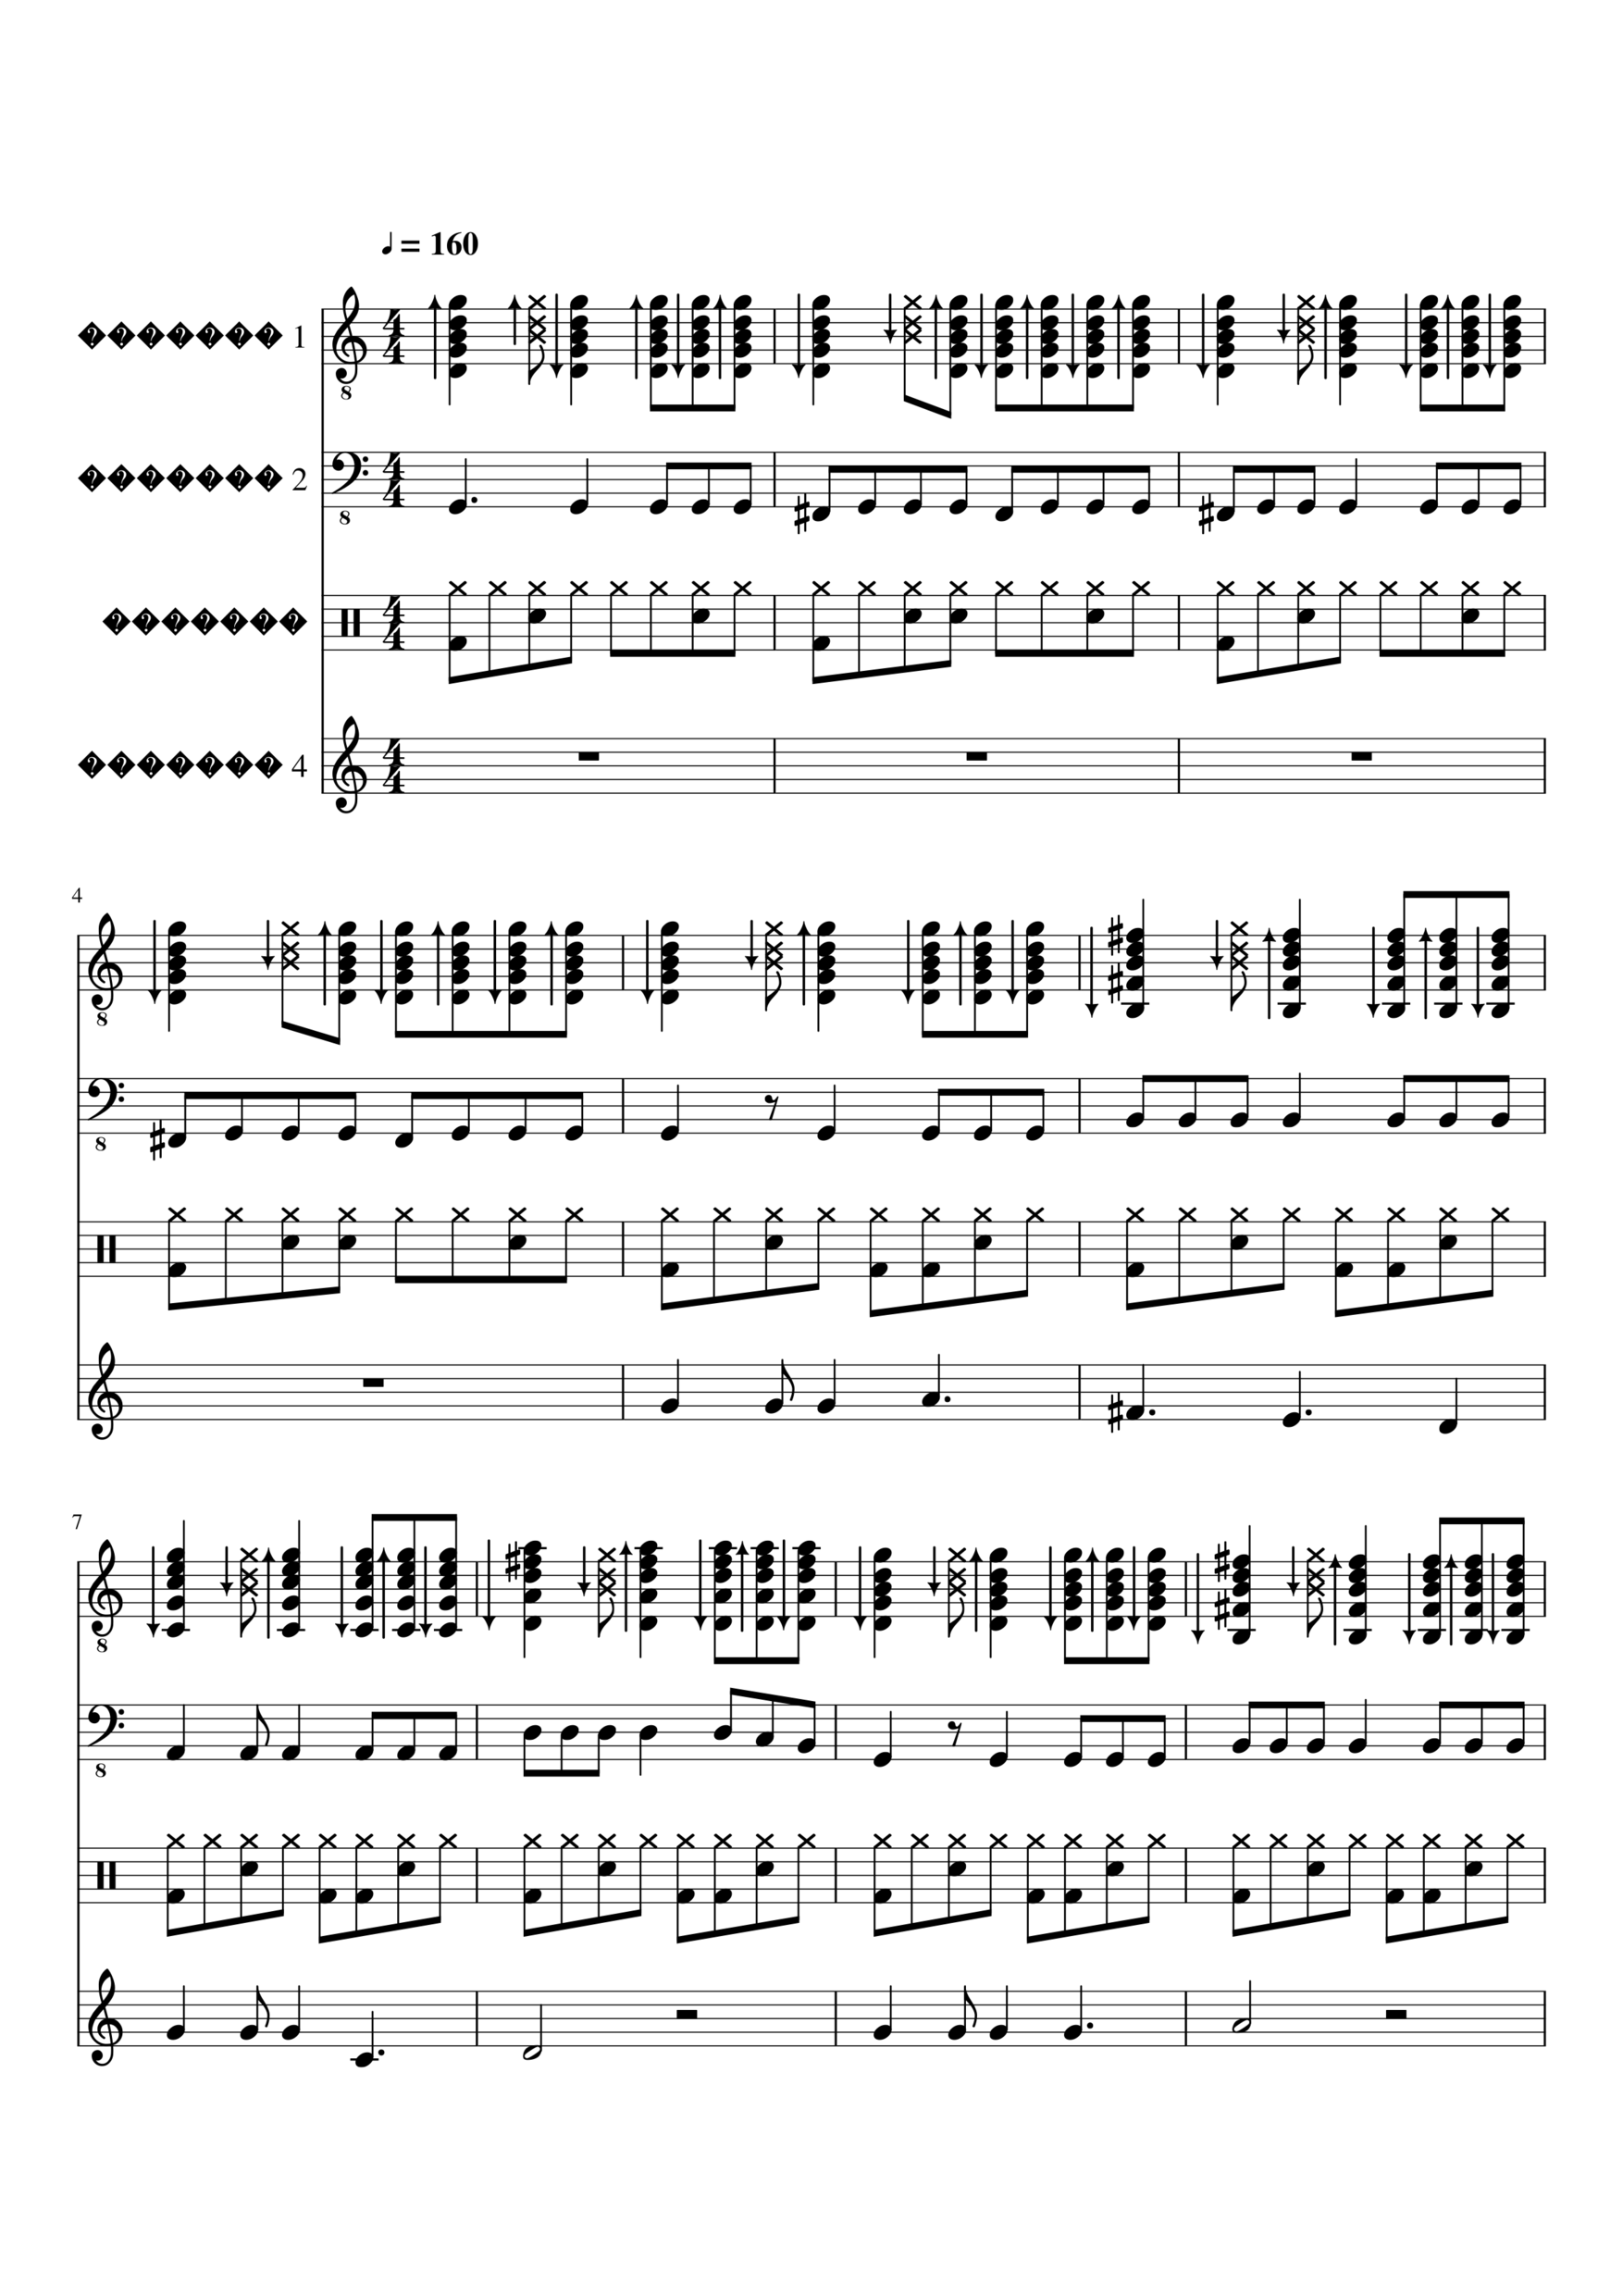 Skvoz dyiru v moey golove slide, Image 1